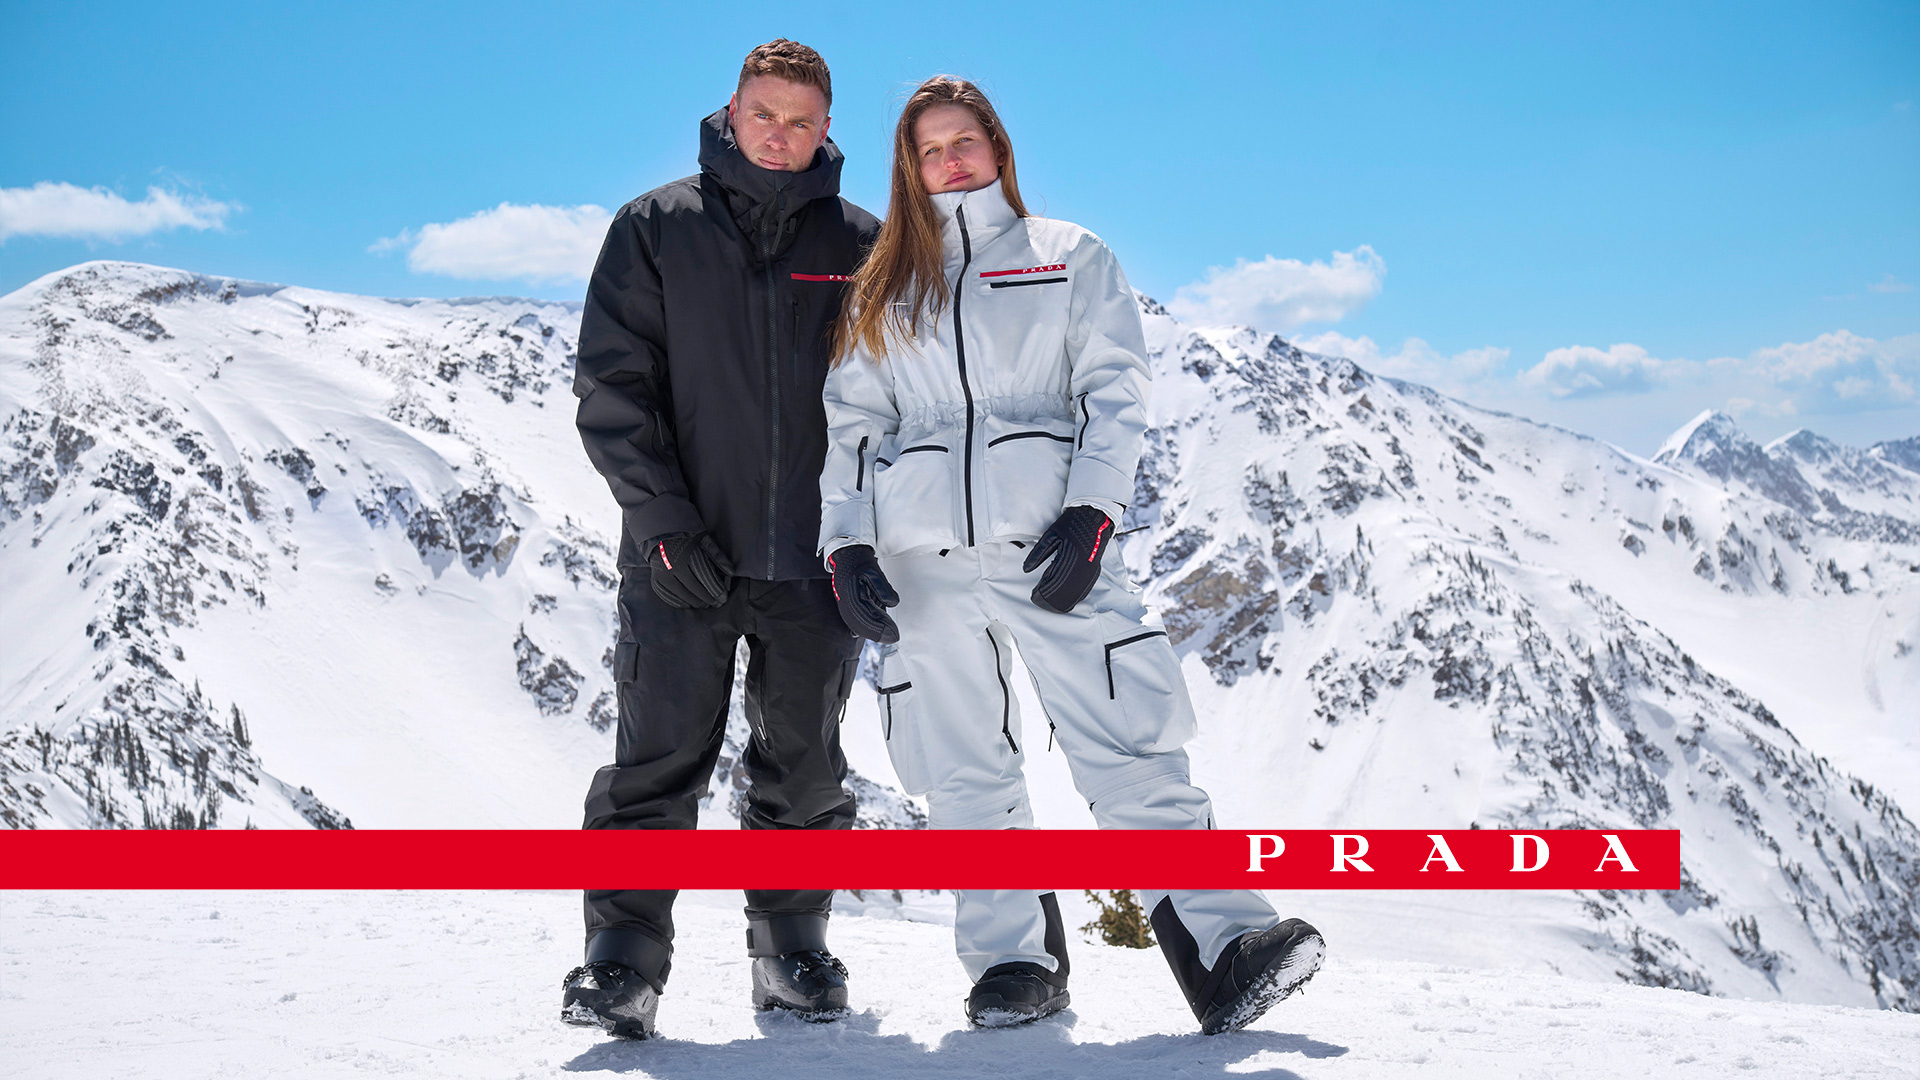 Prada - The #PradaLineaRossaSki collection is made for and